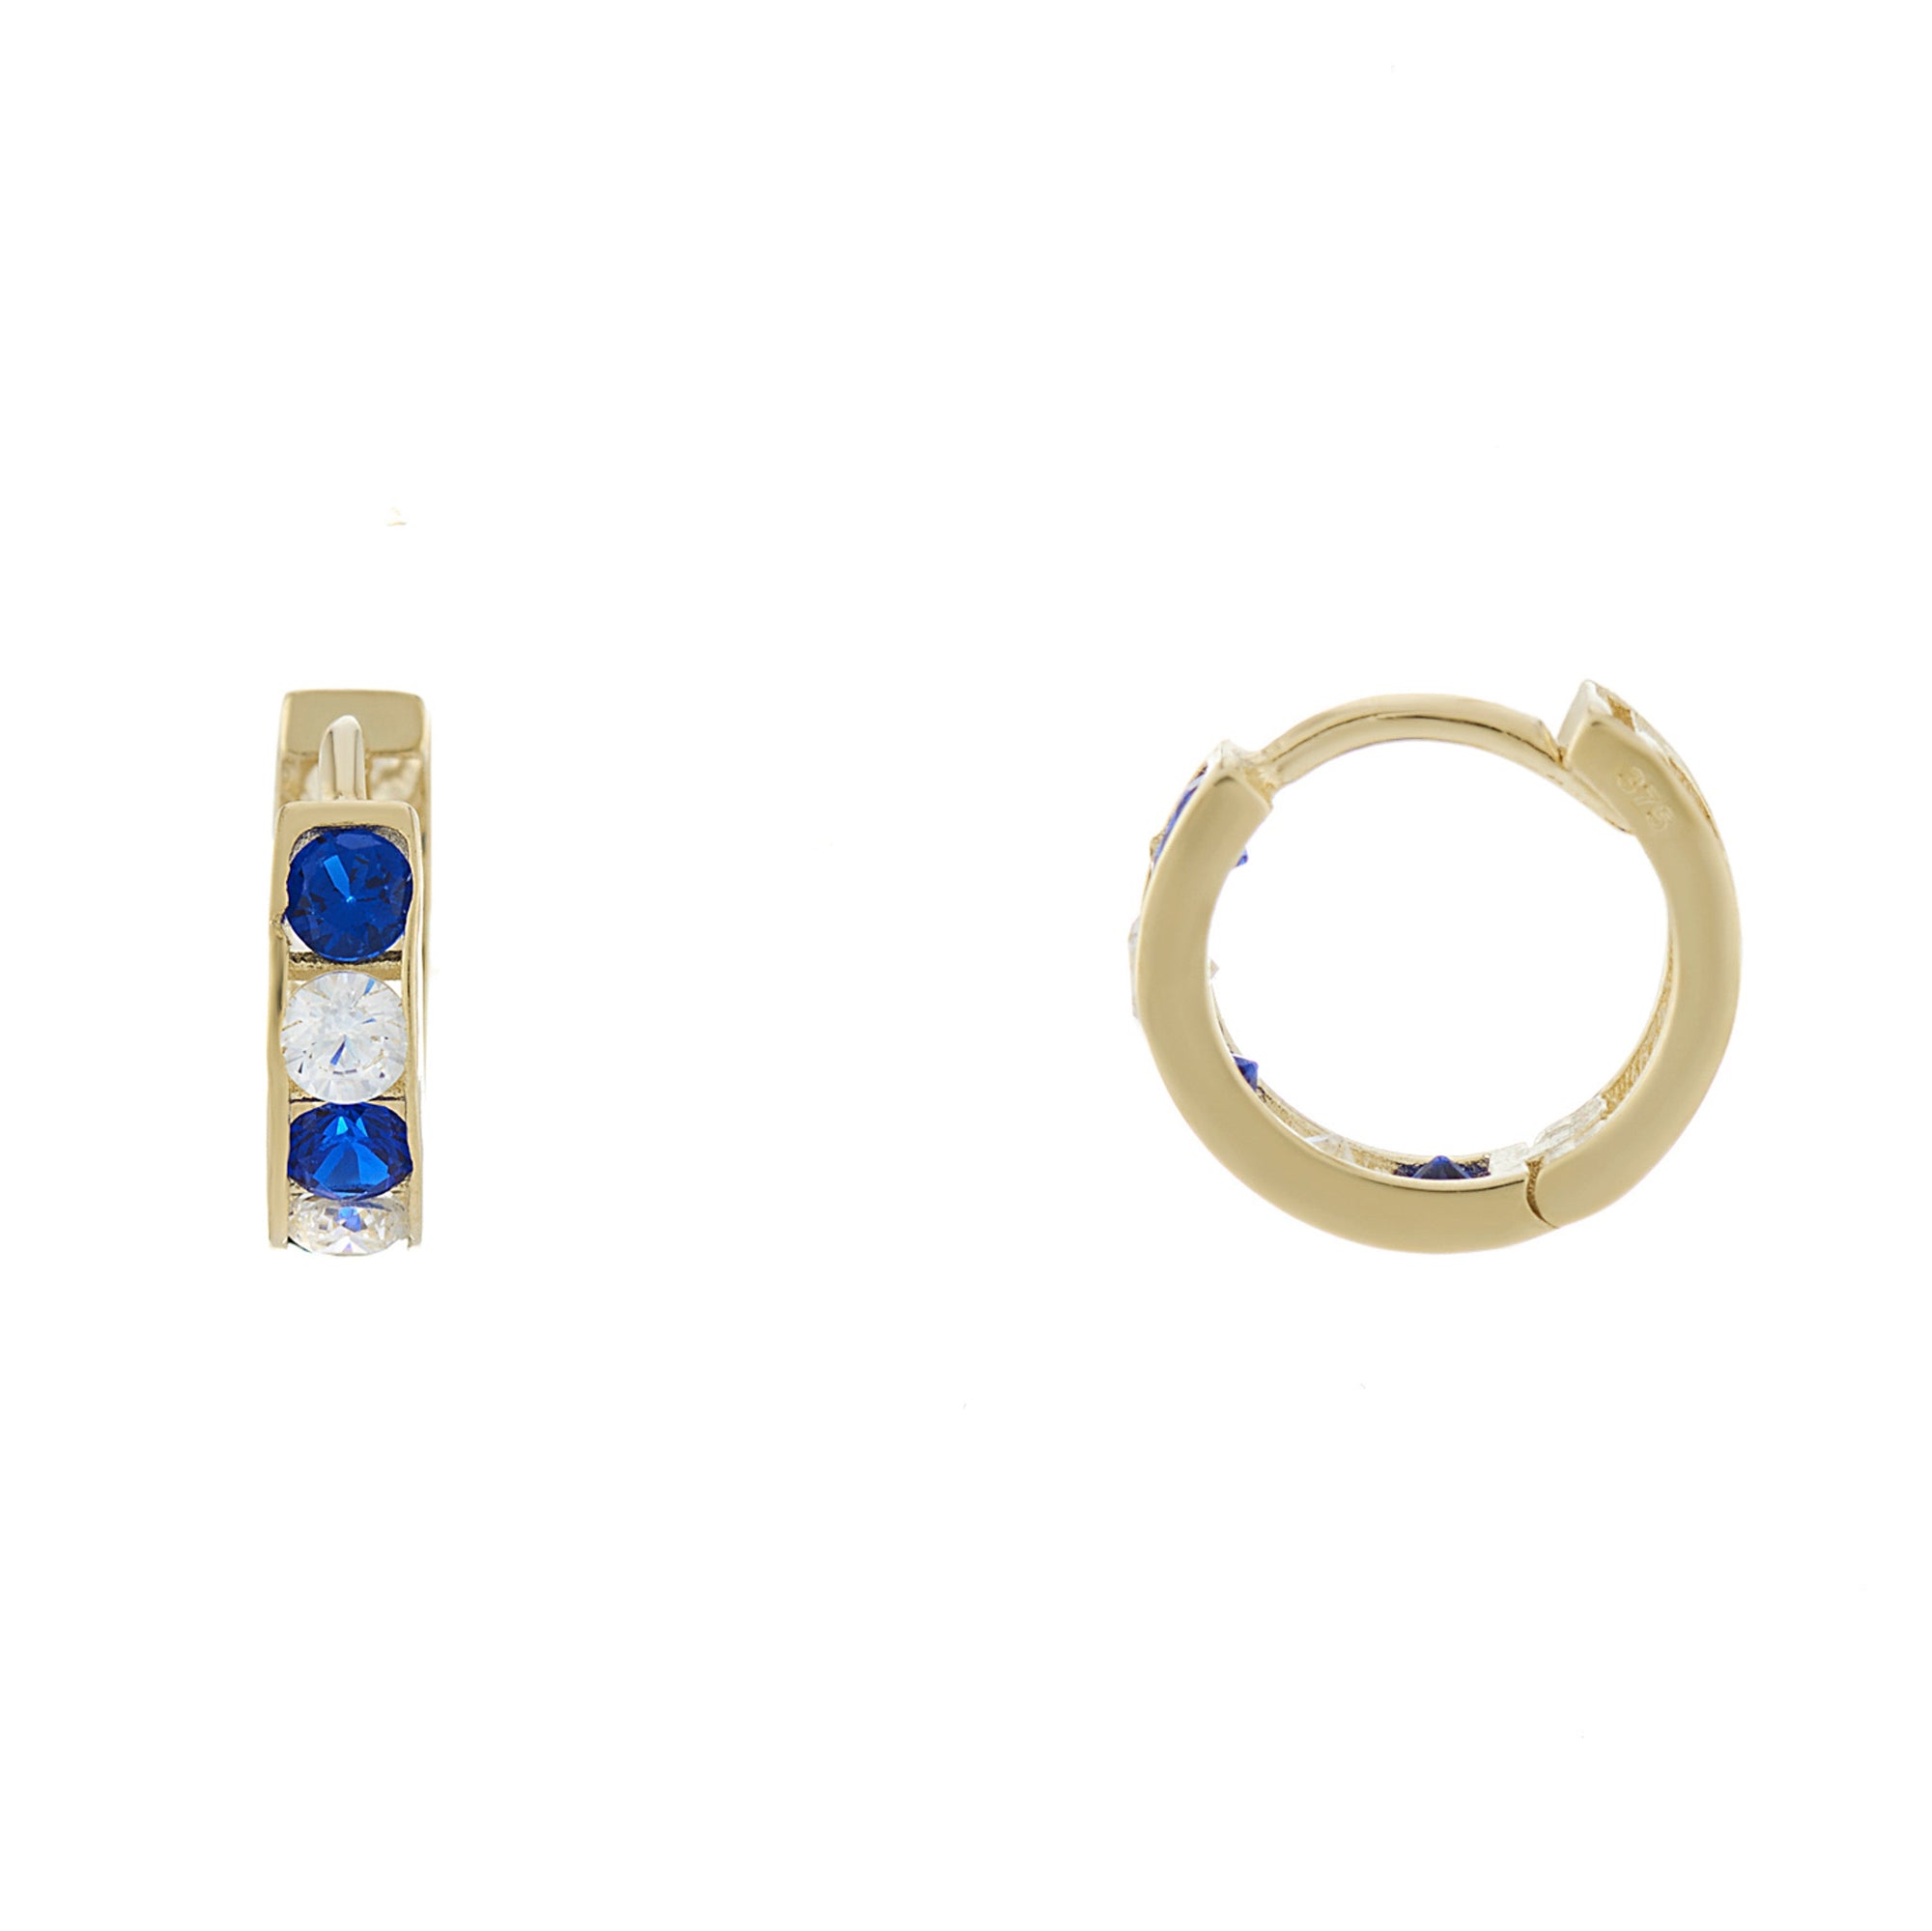 9ct gold 2.75mm x 7.50mm blue & white cz hoop earrings